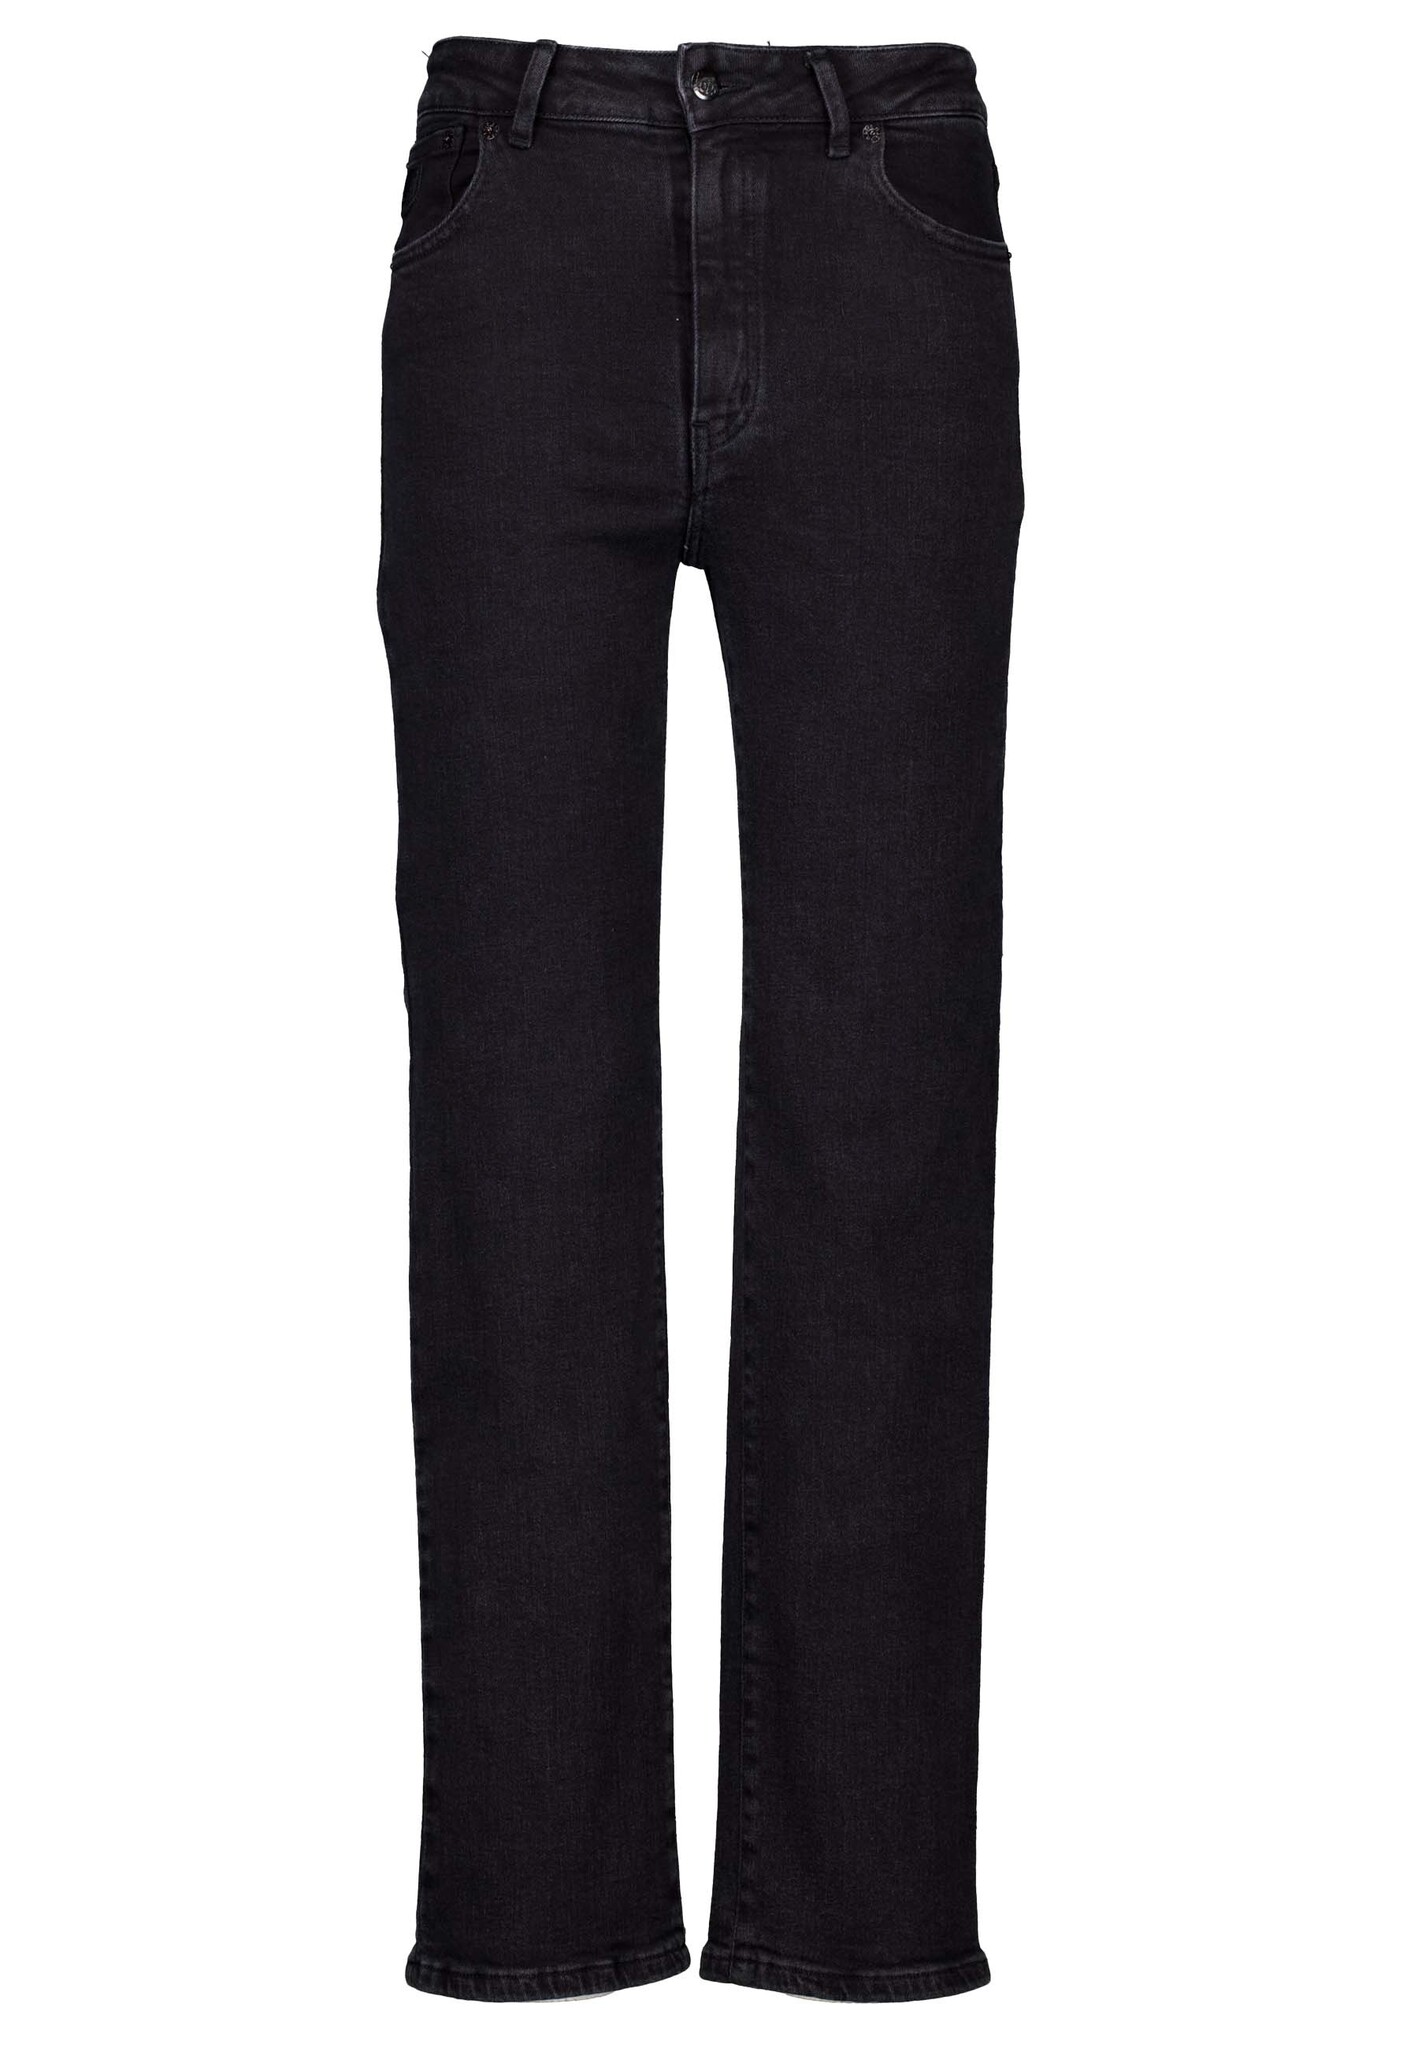 Lois Jeans Zwart Katoen maat 26/34 Malena skinny jeans zwart